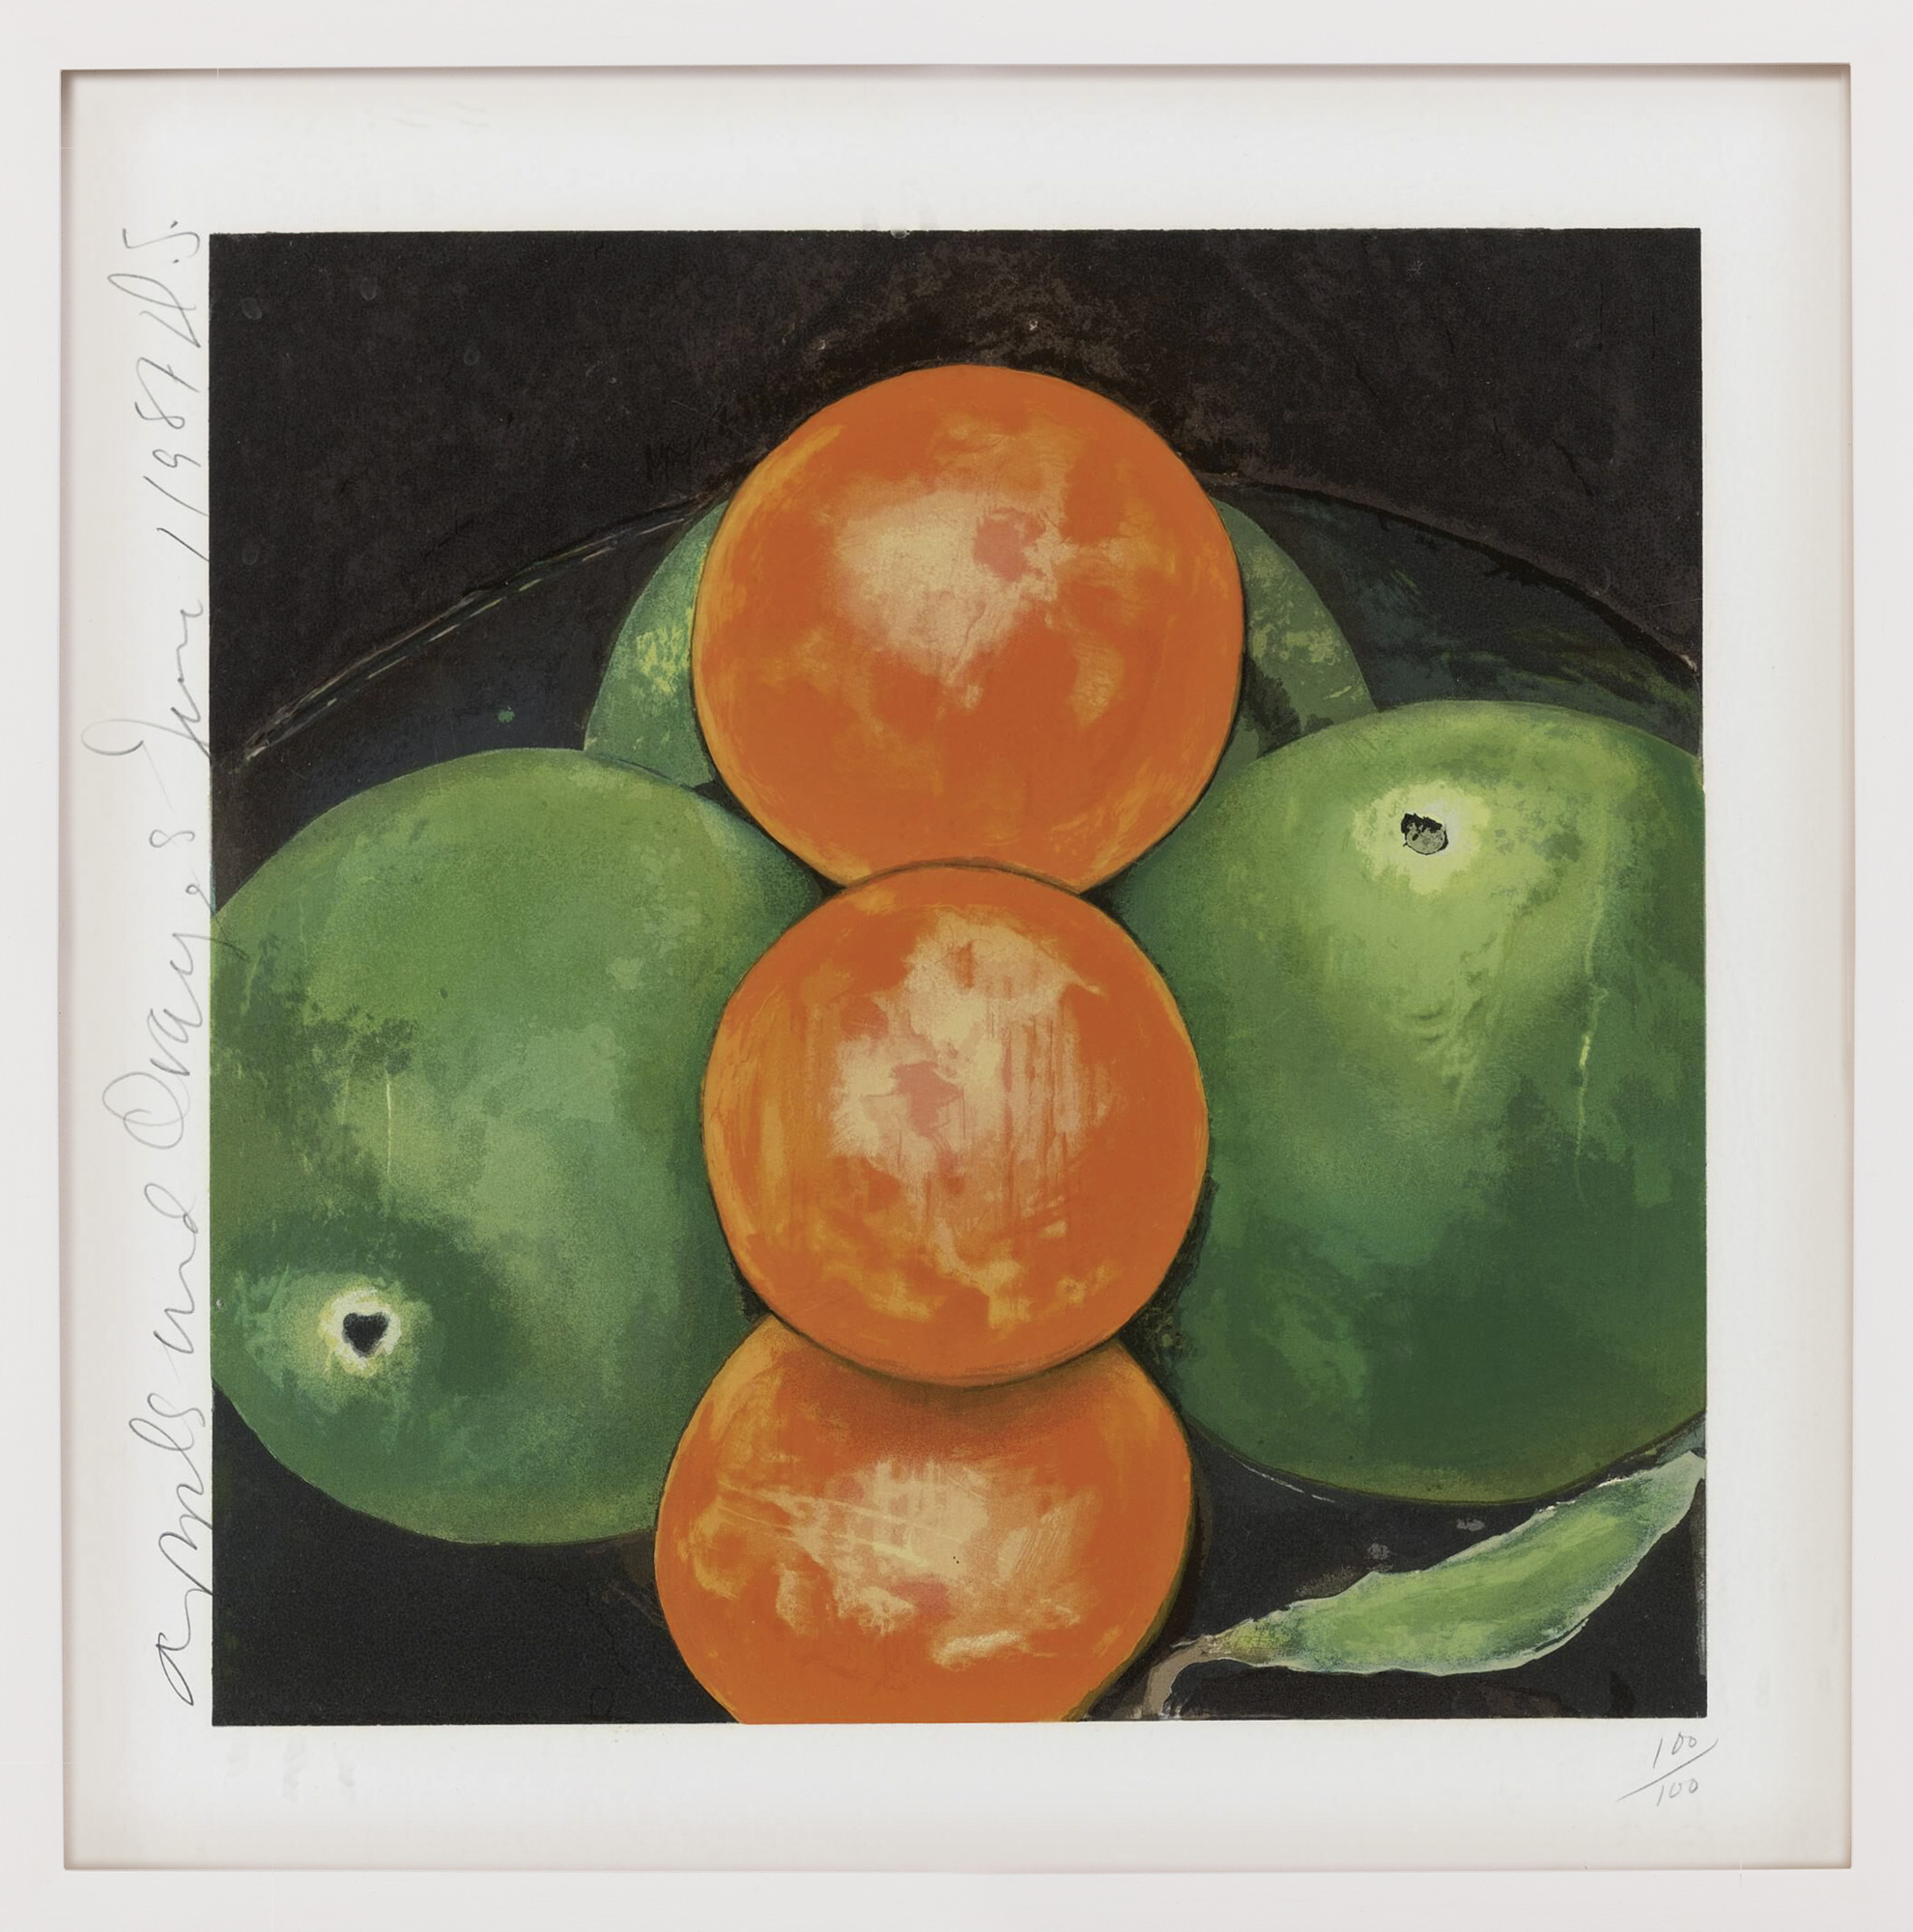 Bild "Apples and Oranges" (1987) von Donald Sultan